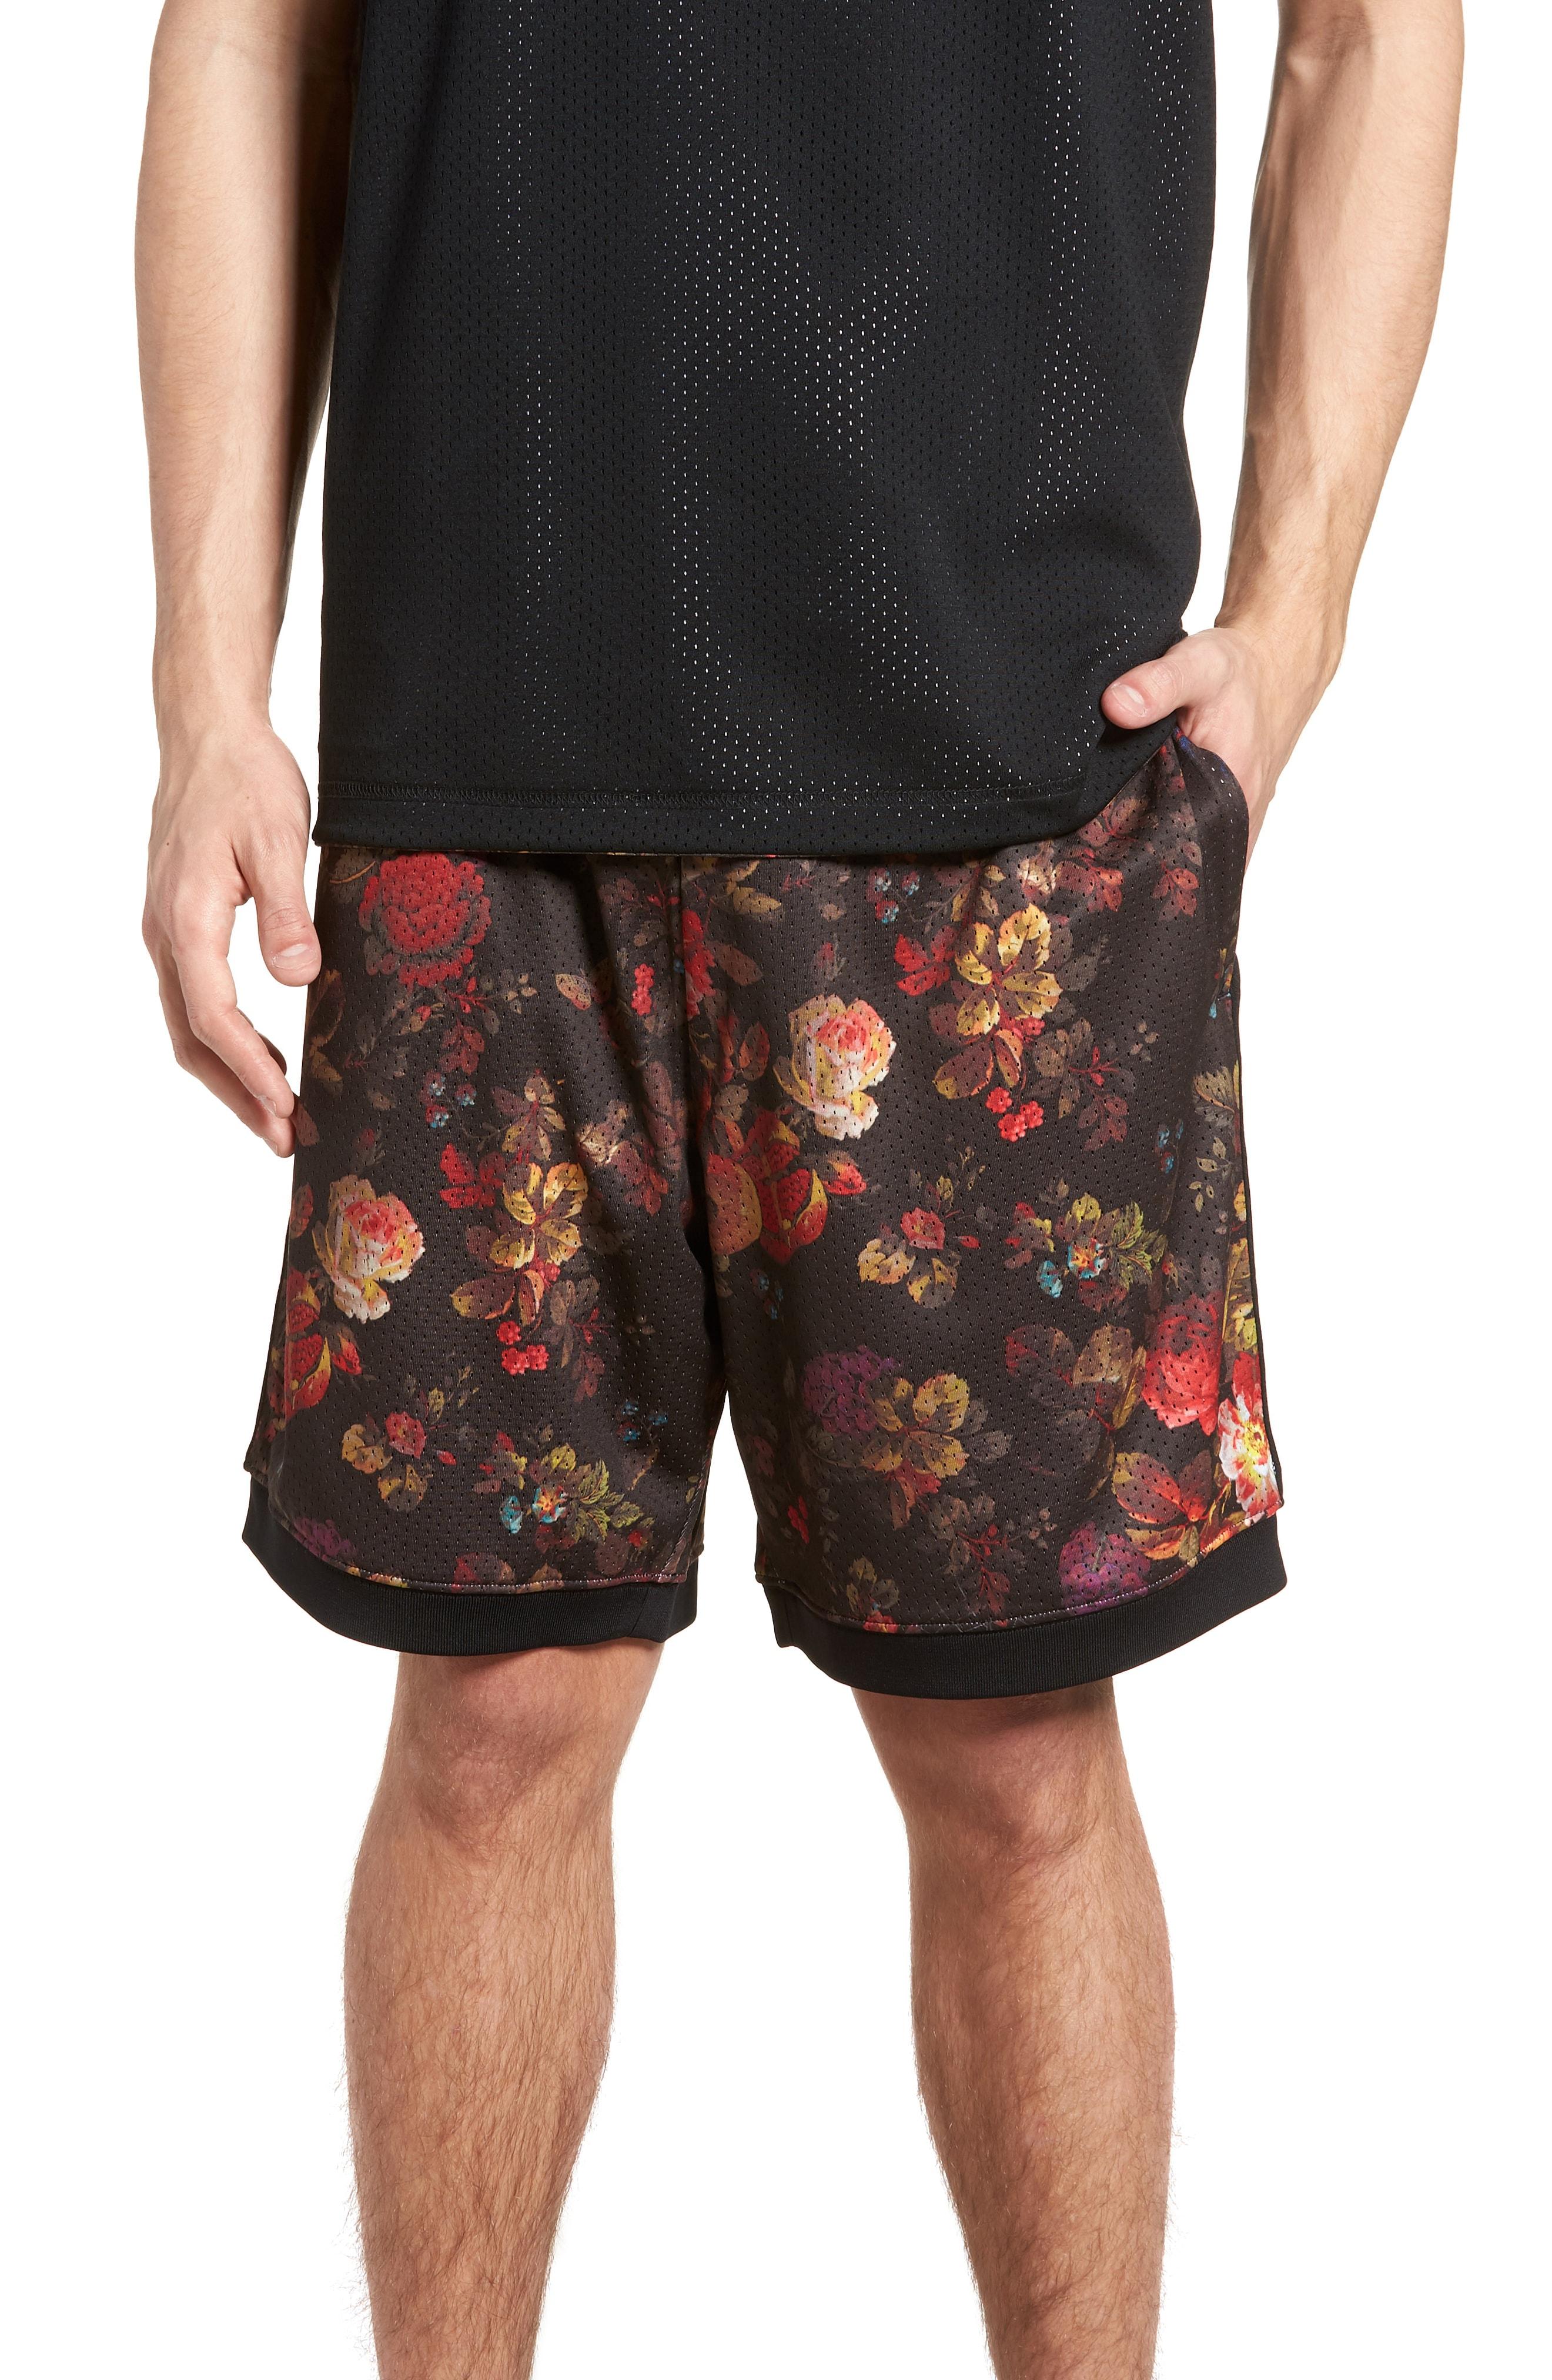 nike shorts floral